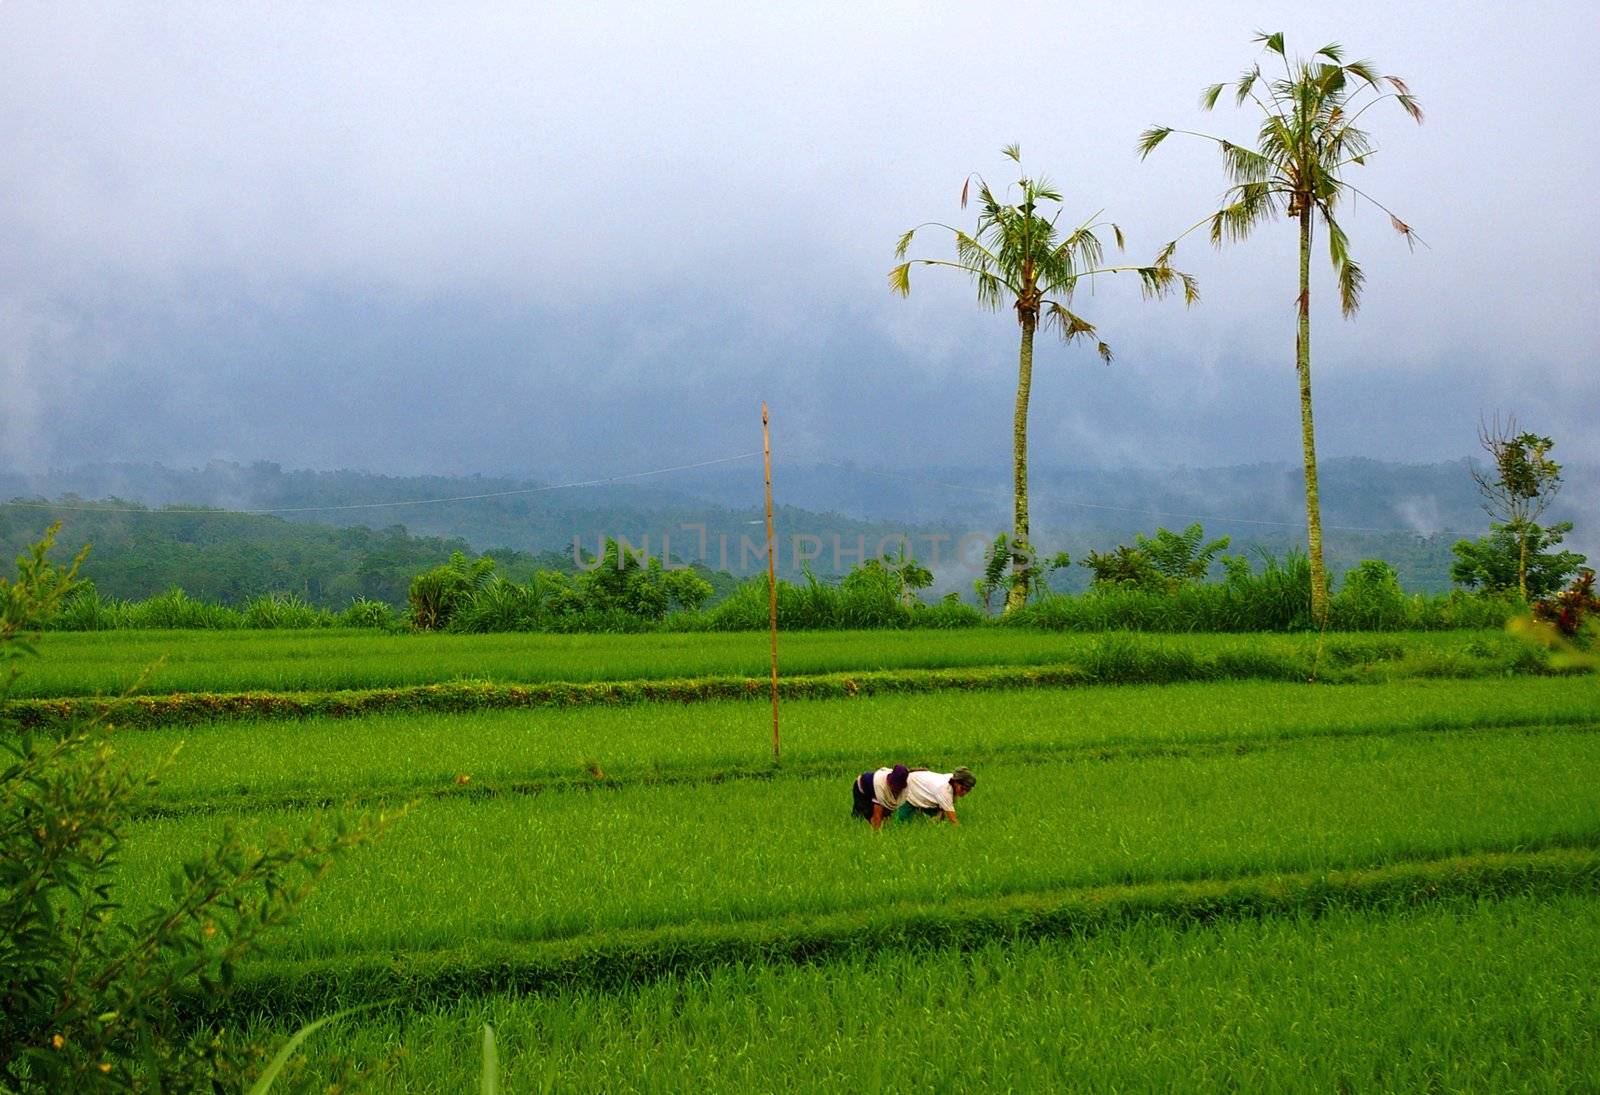 Workers in a rice field, Kiadan Pelaga, Bali, Indonesia.